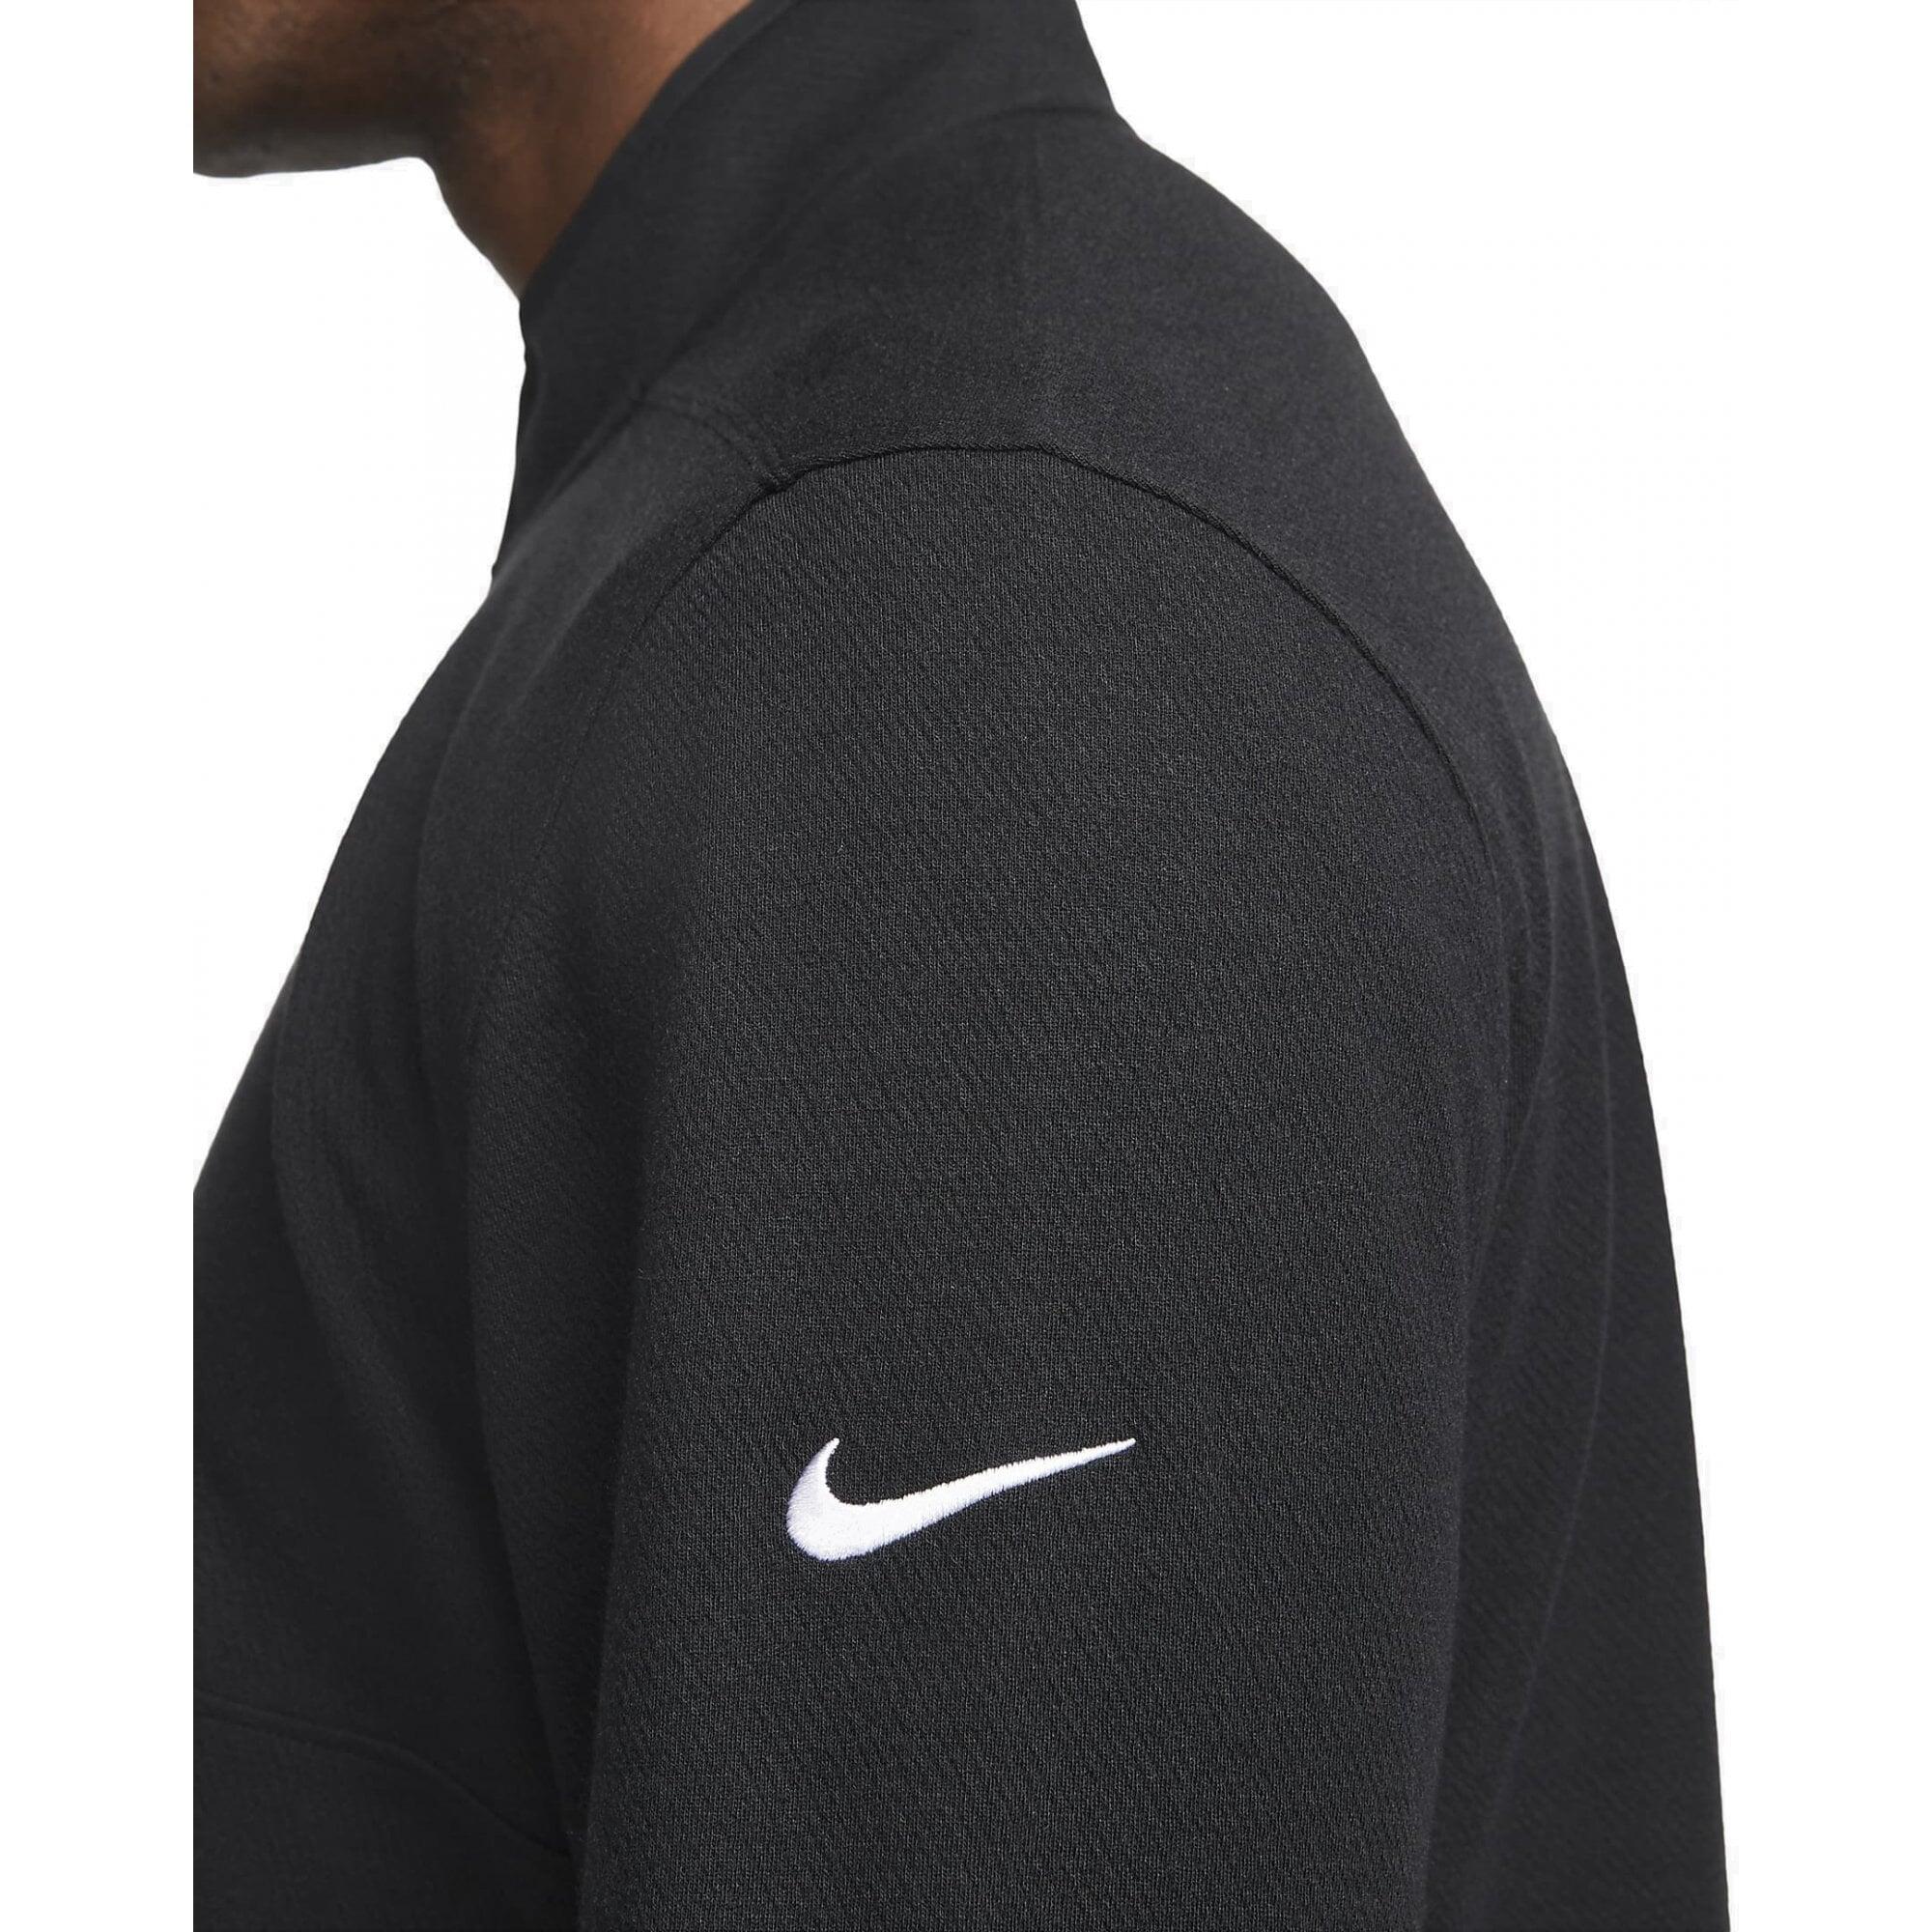 Nike Dri-FIT Victory Long Sleeve Top Black/Black/White 4/5